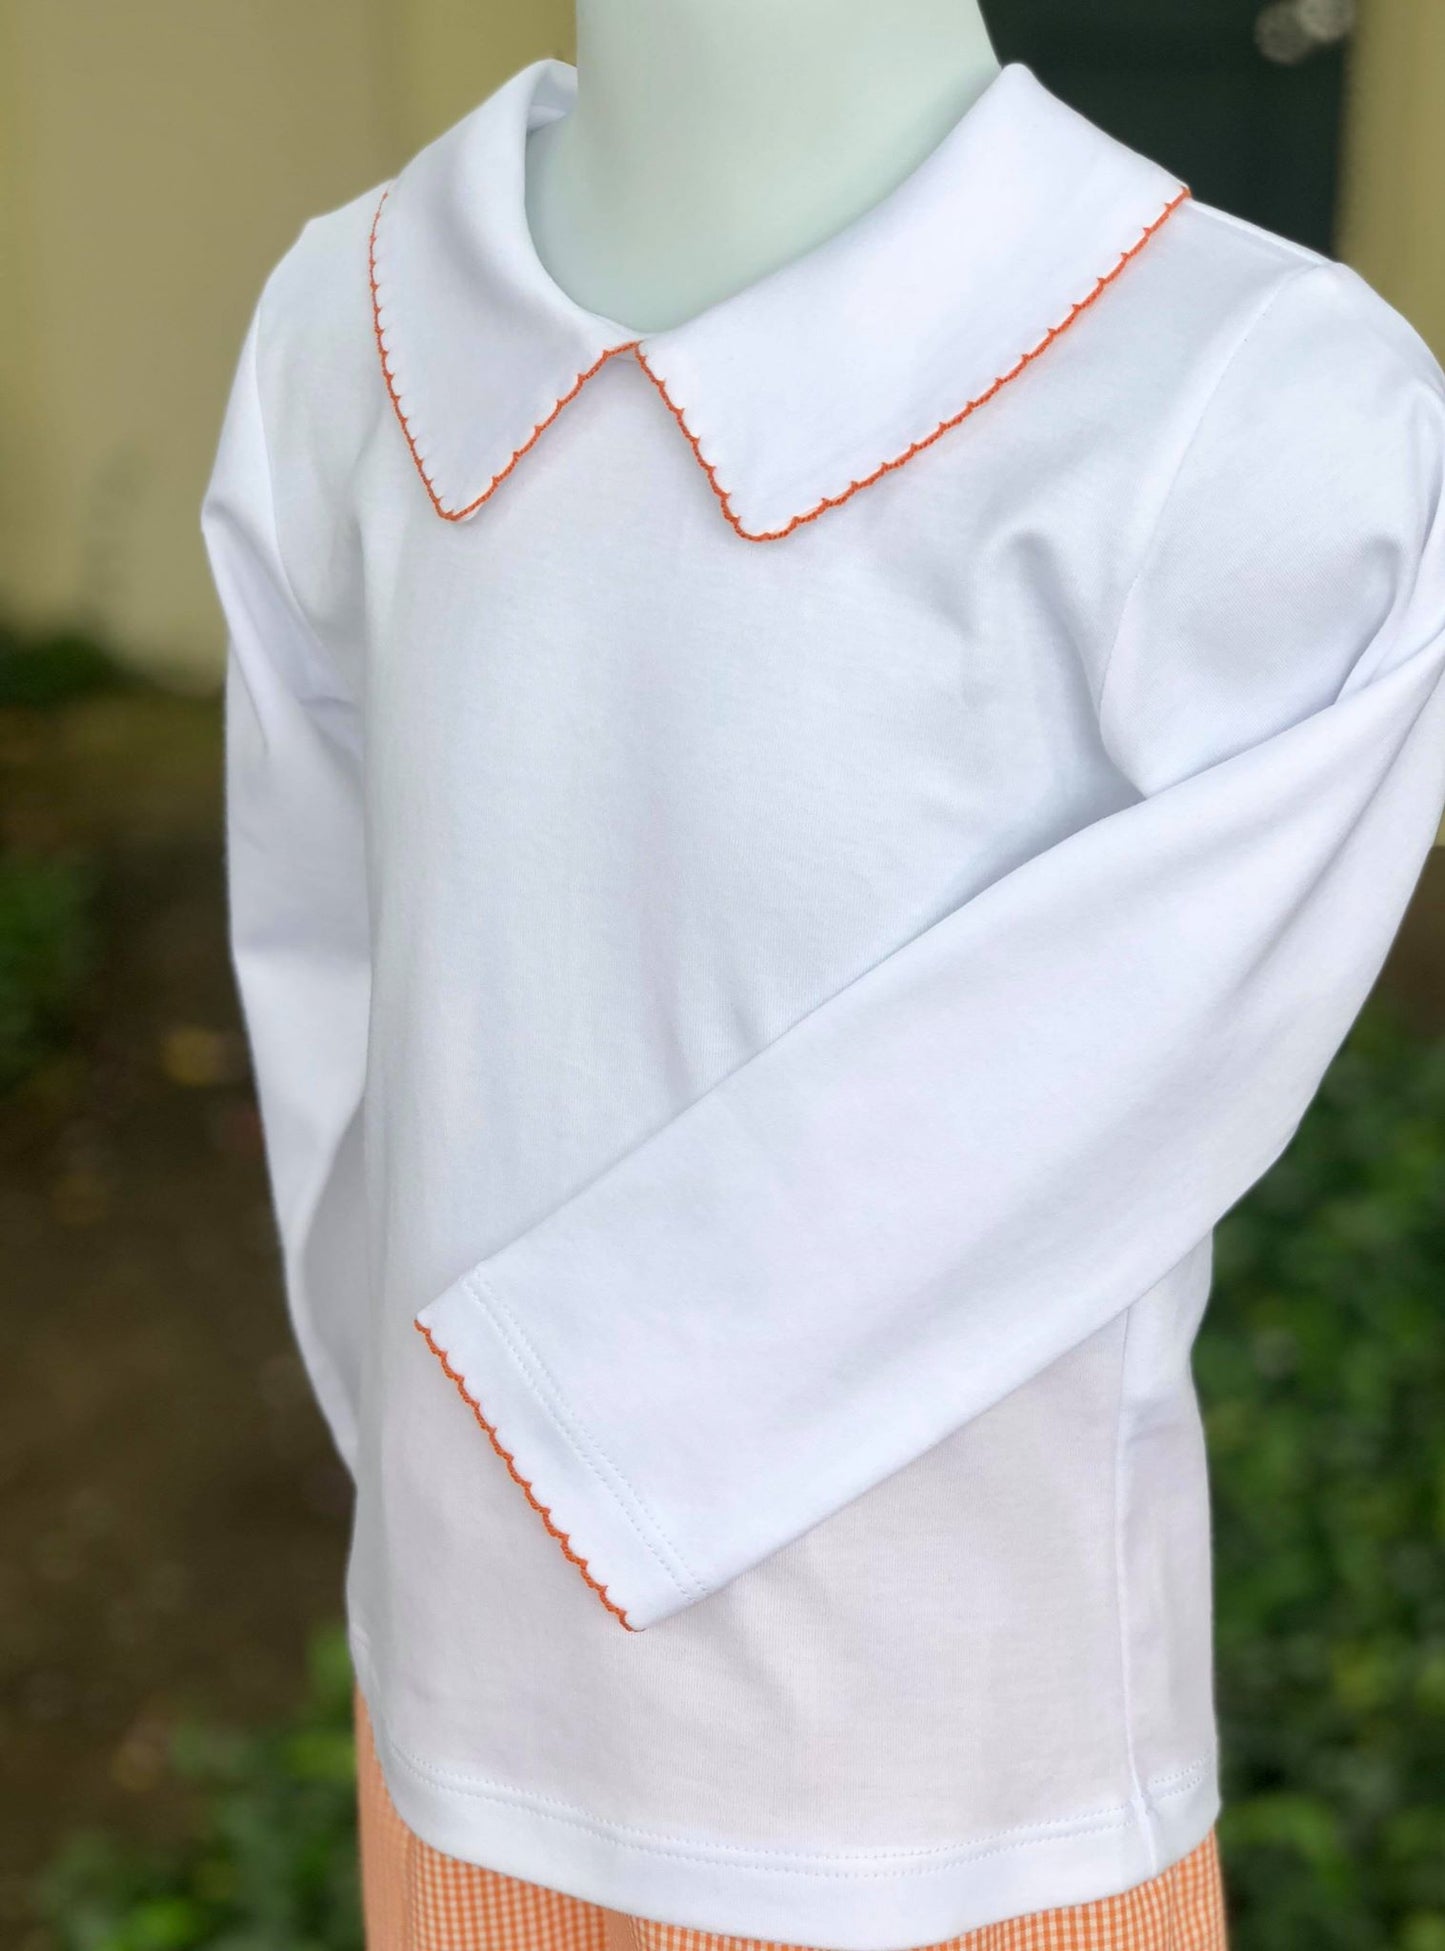 Pointed collar shirt with orange picot trim*